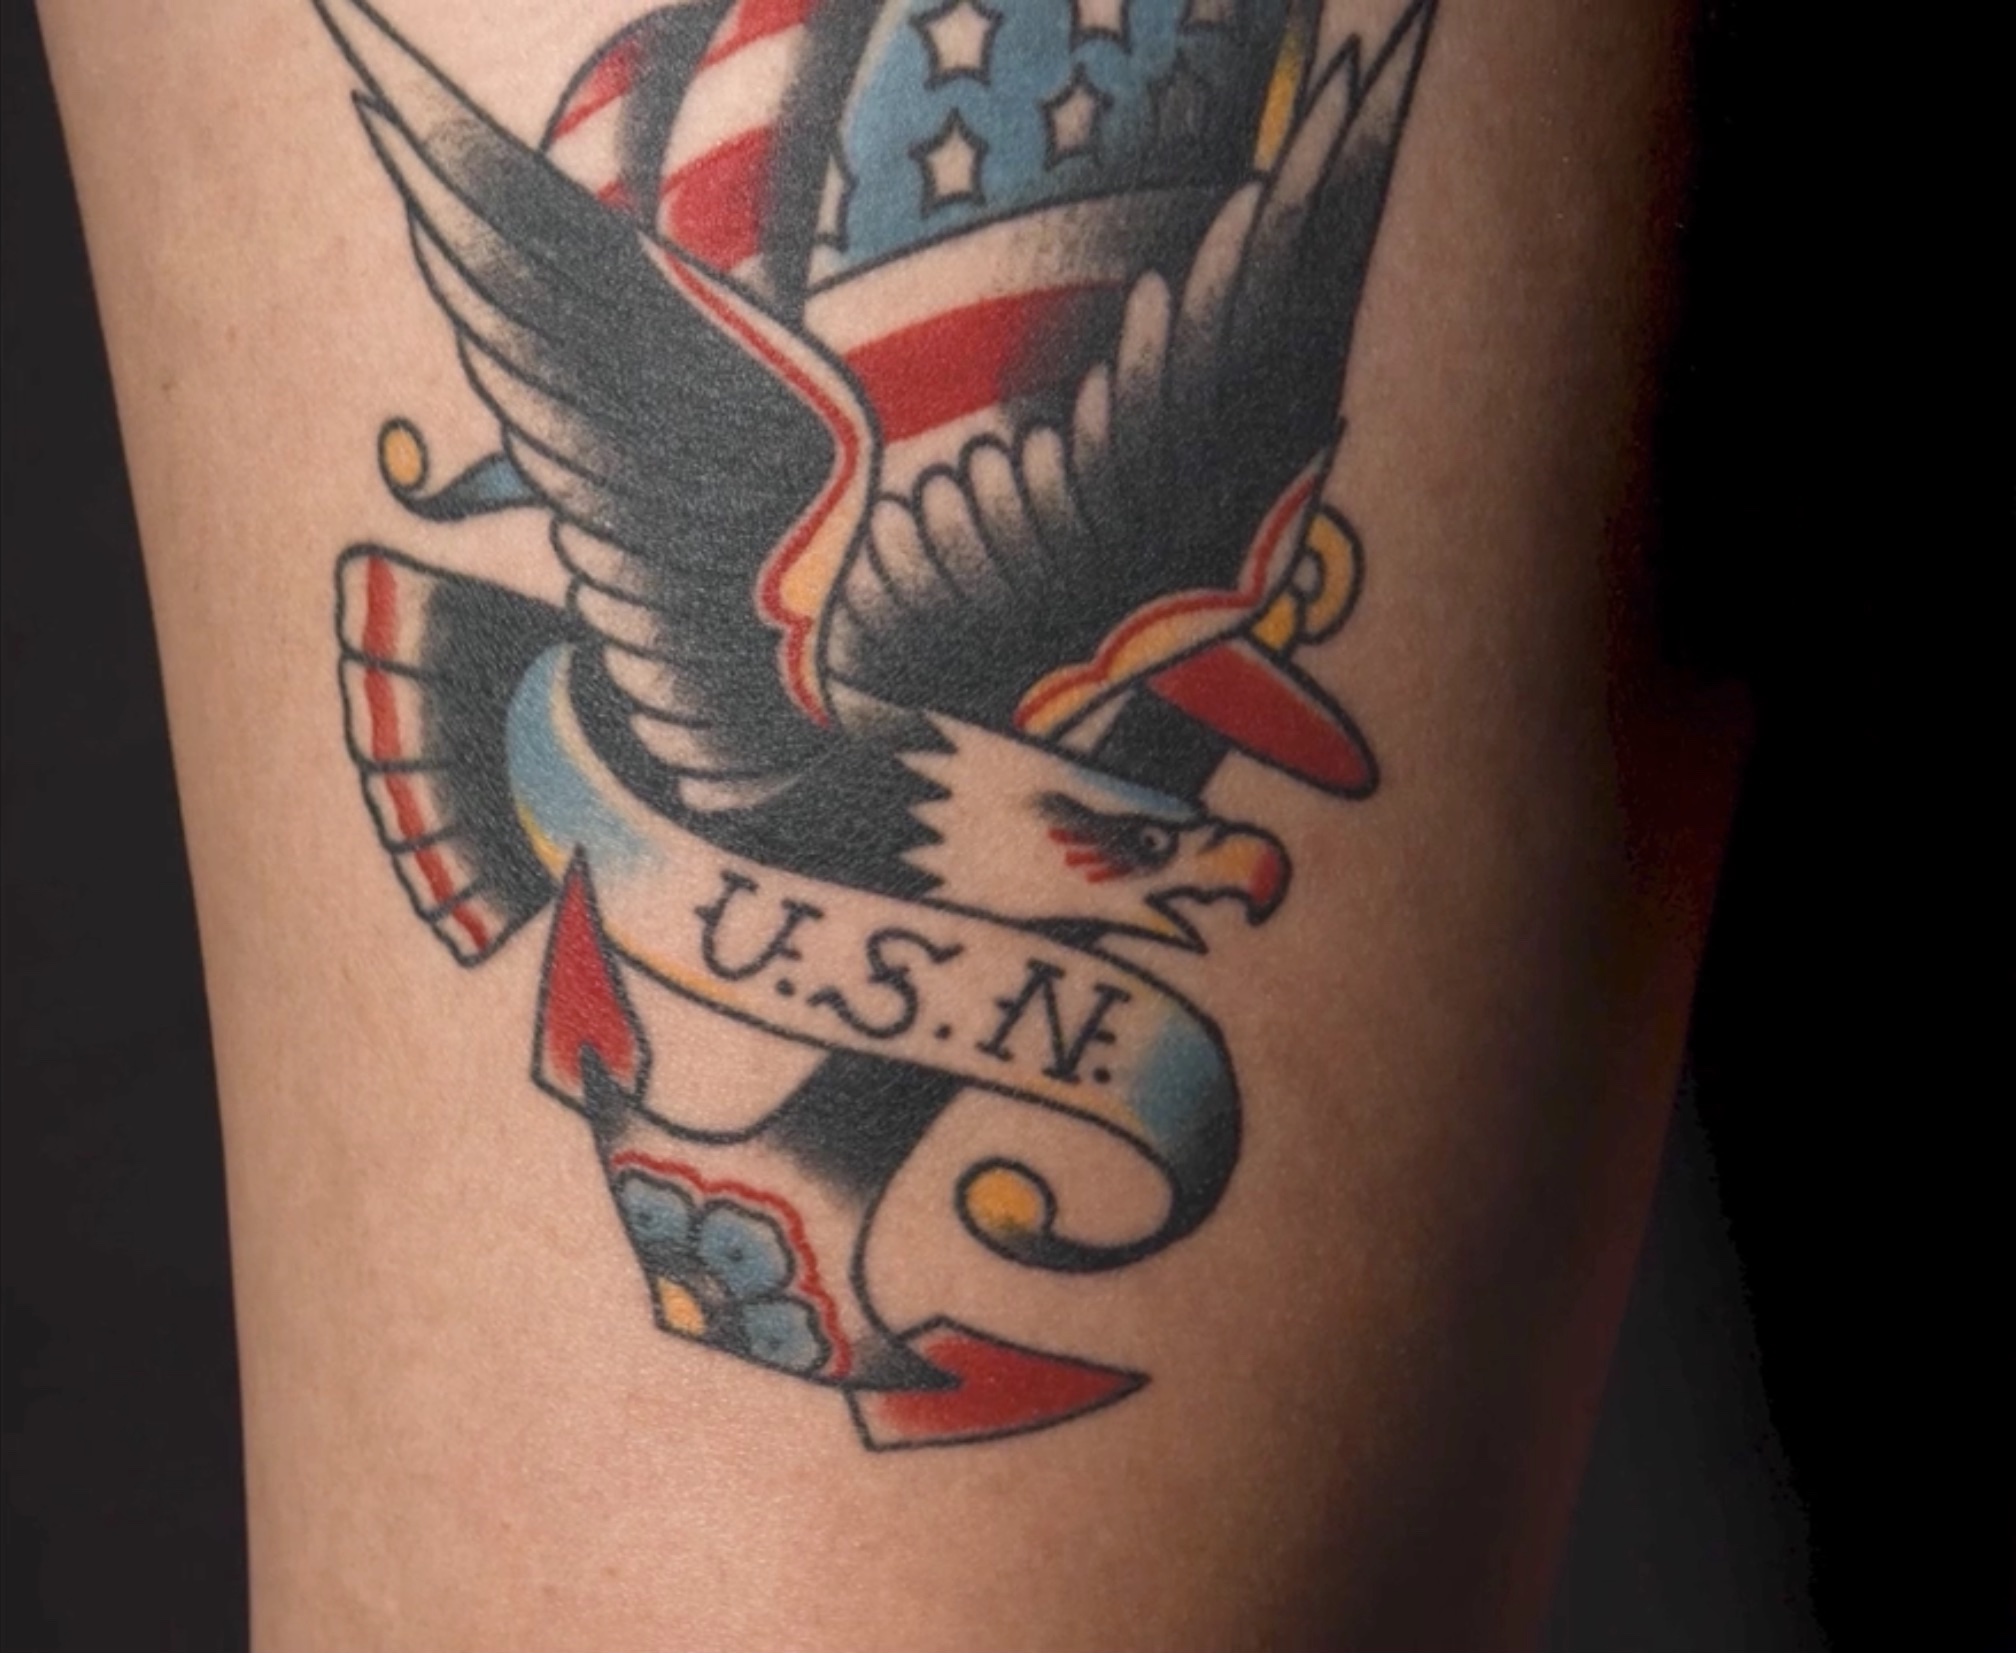 100 Striking Eagle Tattoo Designs for Men & Women